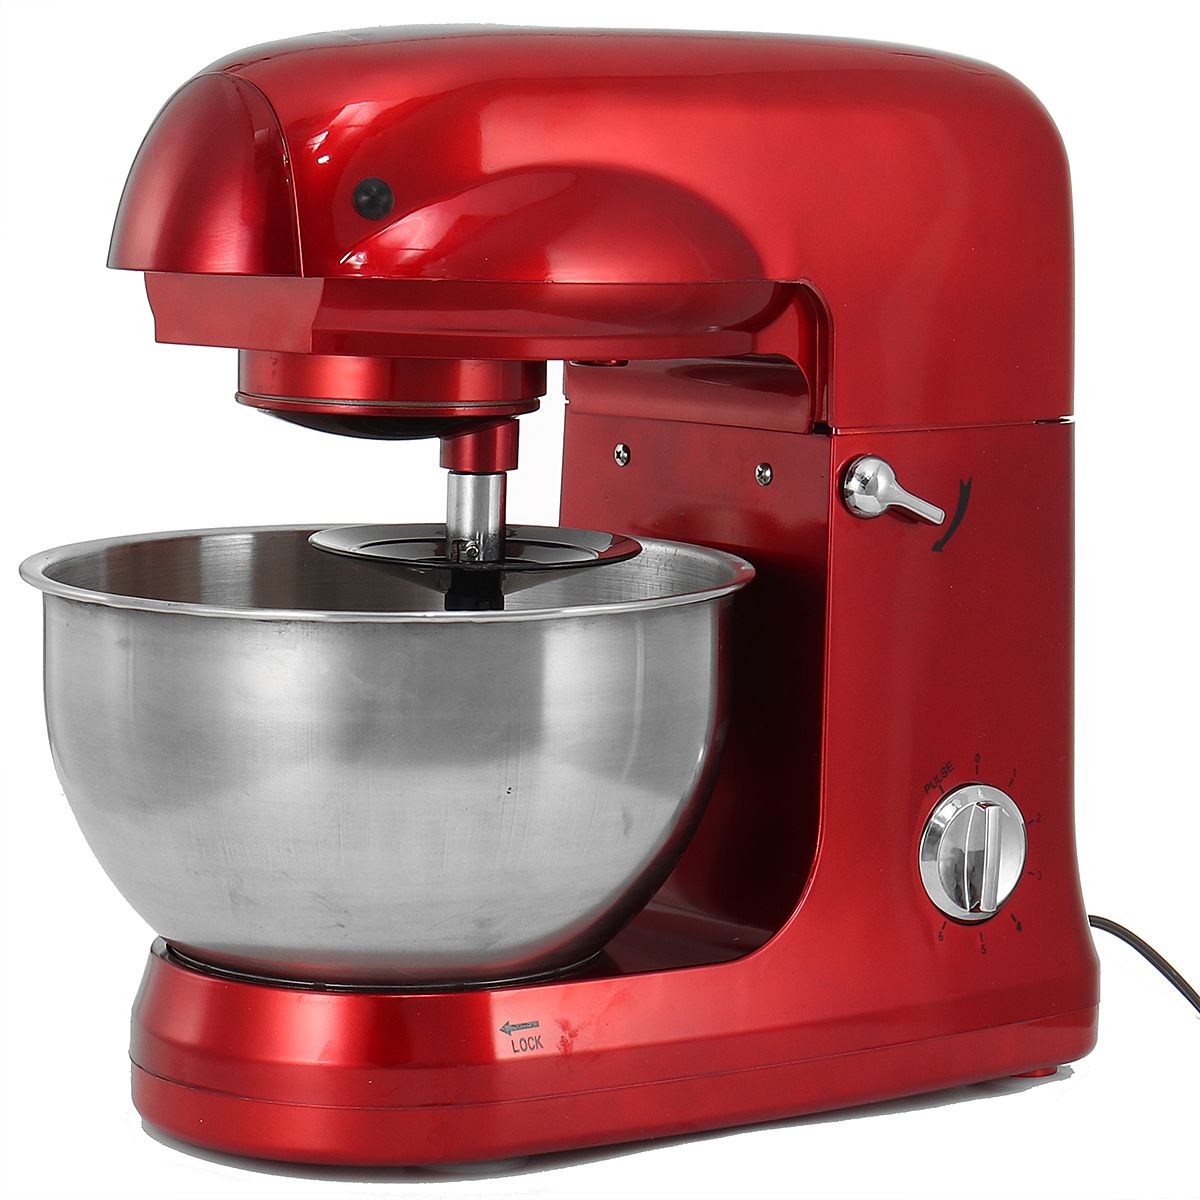 50L-Stand-Mixer-Kitchen-Bowl-Blender-Food-Kneading-Baking-Cooking-Machine-110V-1710810